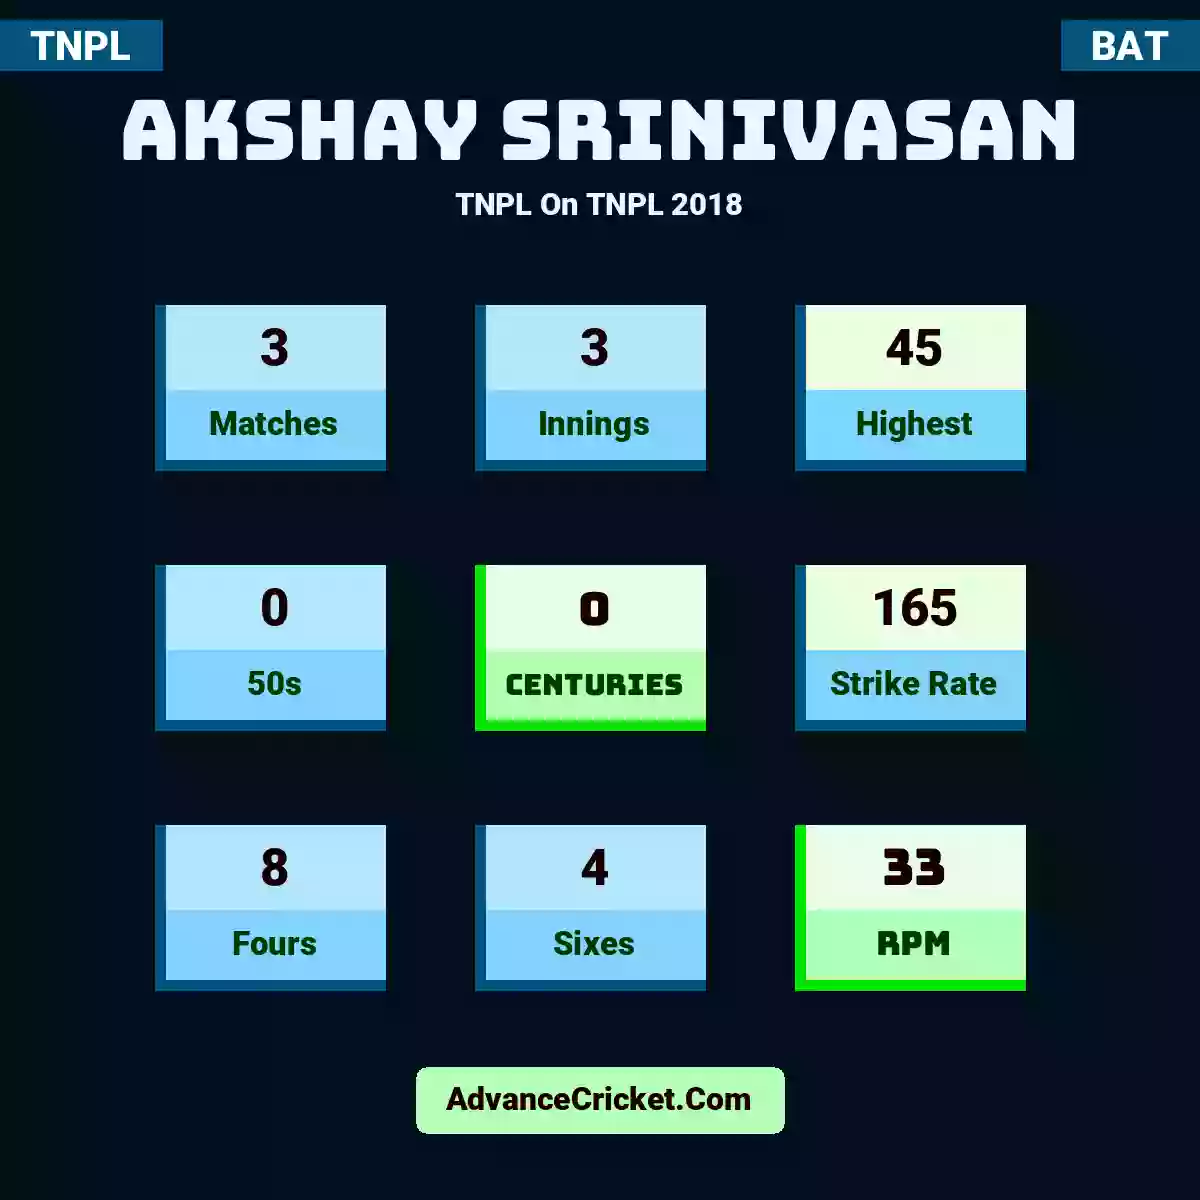 Akshay Srinivasan TNPL  On TNPL 2018, Akshay Srinivasan played 3 matches, scored 45 runs as highest, 0 half-centuries, and 0 centuries, with a strike rate of 165. A.Srinivasan hit 8 fours and 4 sixes, with an RPM of 33.